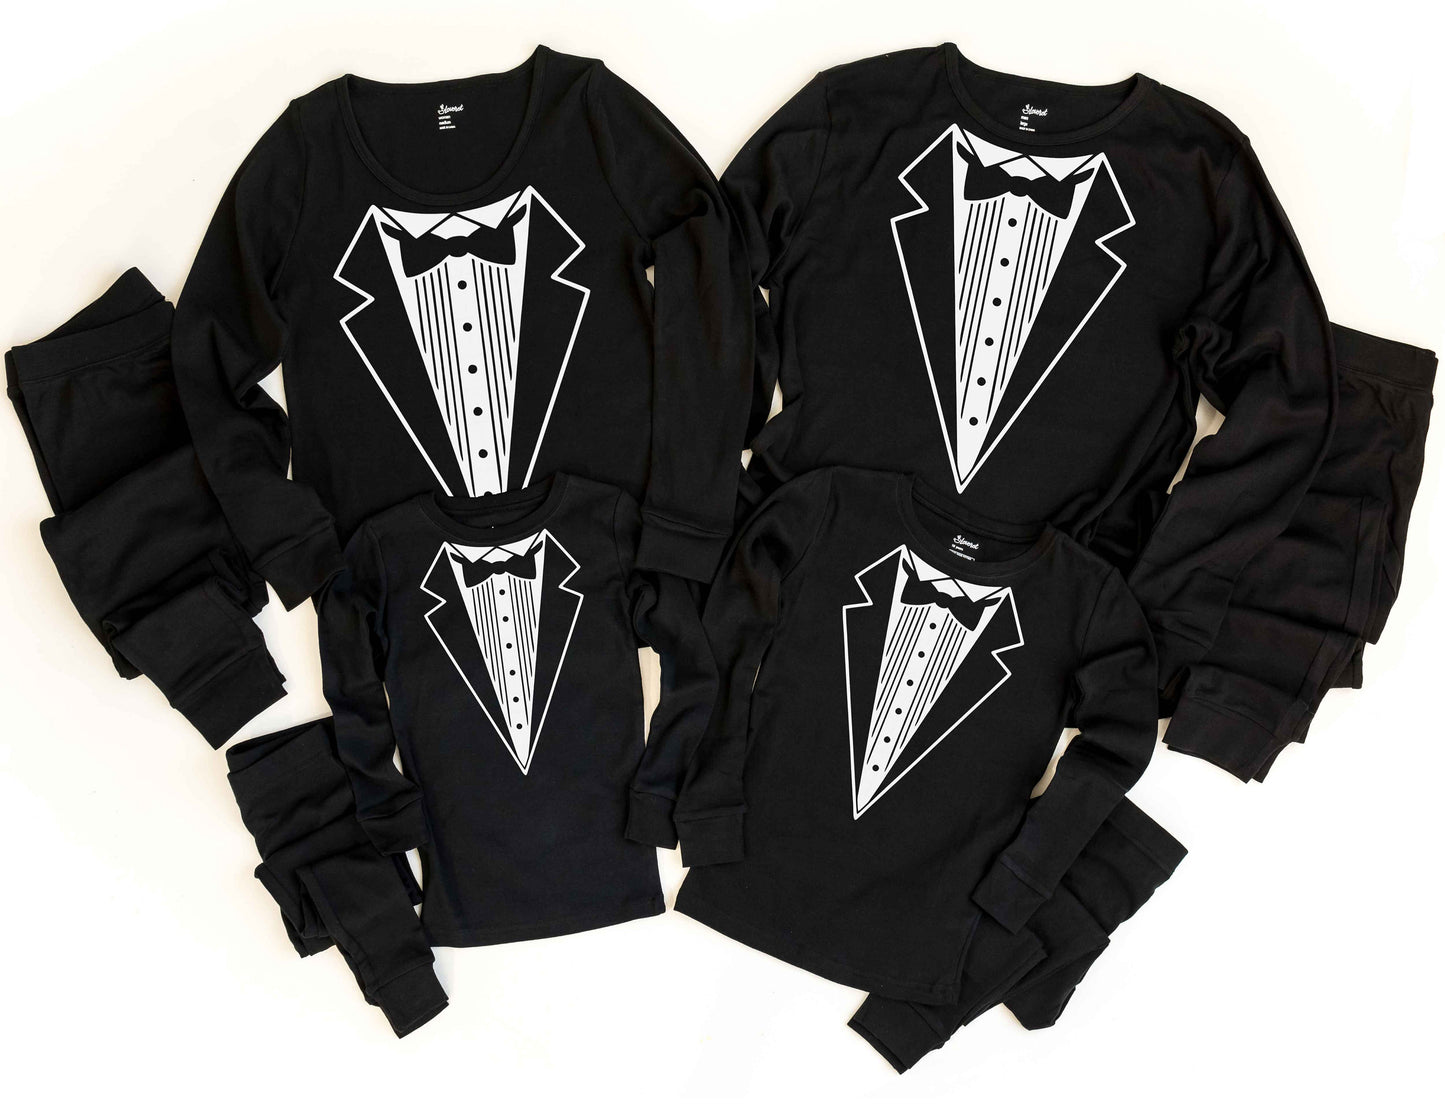 Tuxedo Solid Black Pajamas Solid Black- Groomsman Pajama Sets - Kids and Adult Sizes - Wedding Party Pajamas